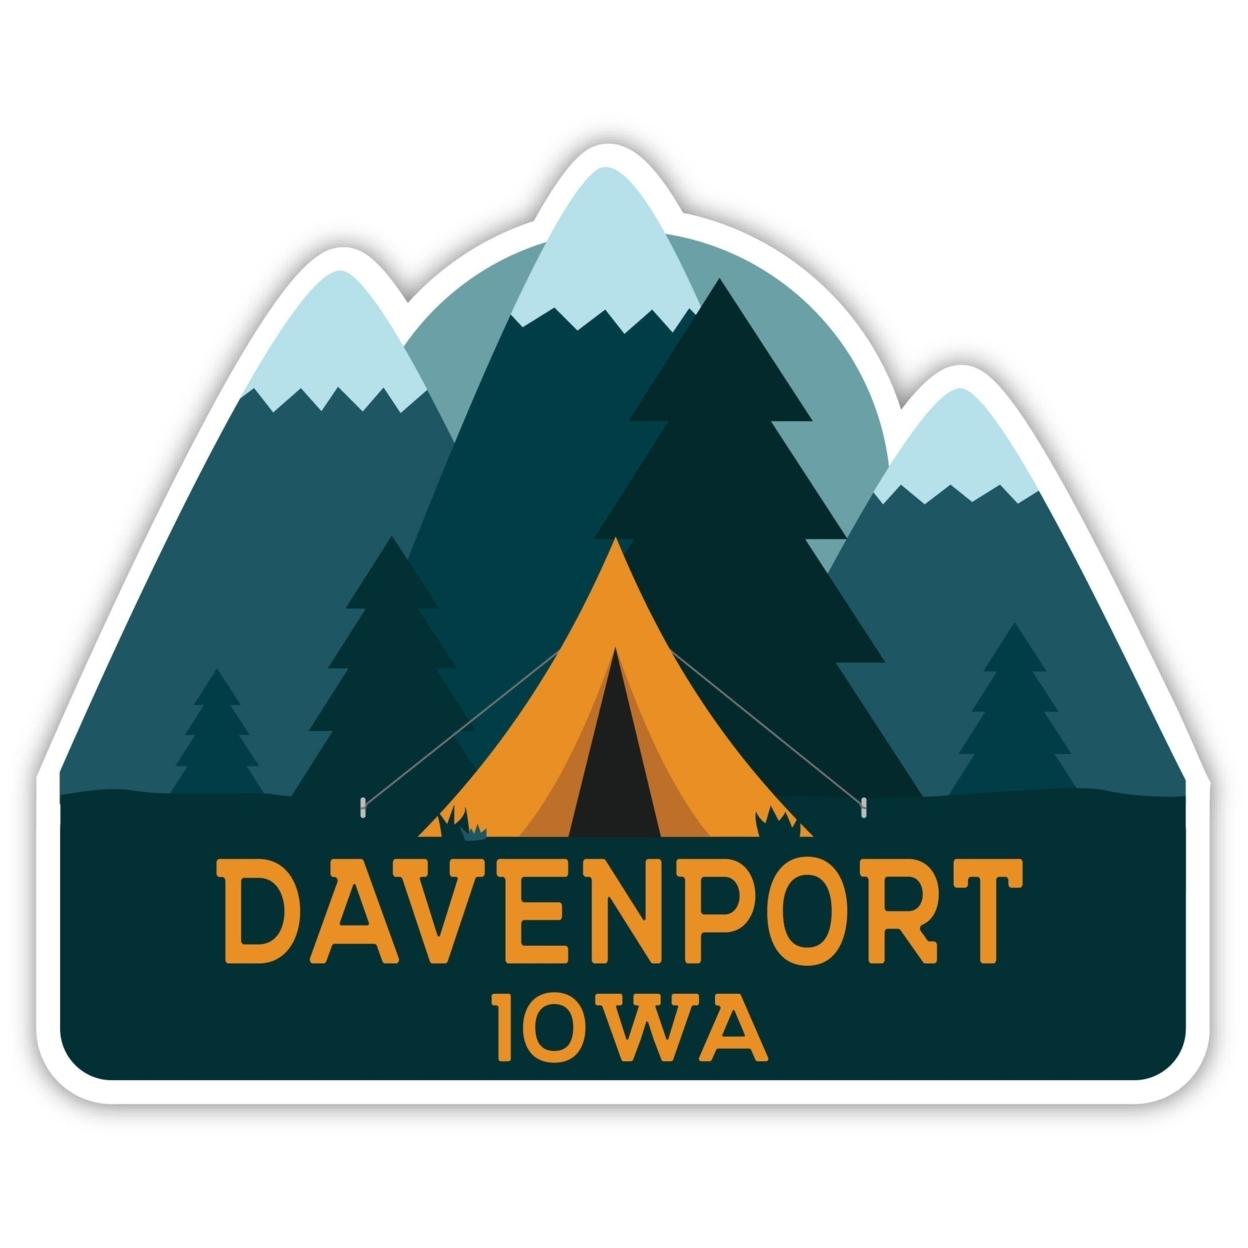 Davenport Iowa Souvenir Decorative Stickers (Choose Theme And Size) - 4-Pack, 4-Inch, Adventures Awaits